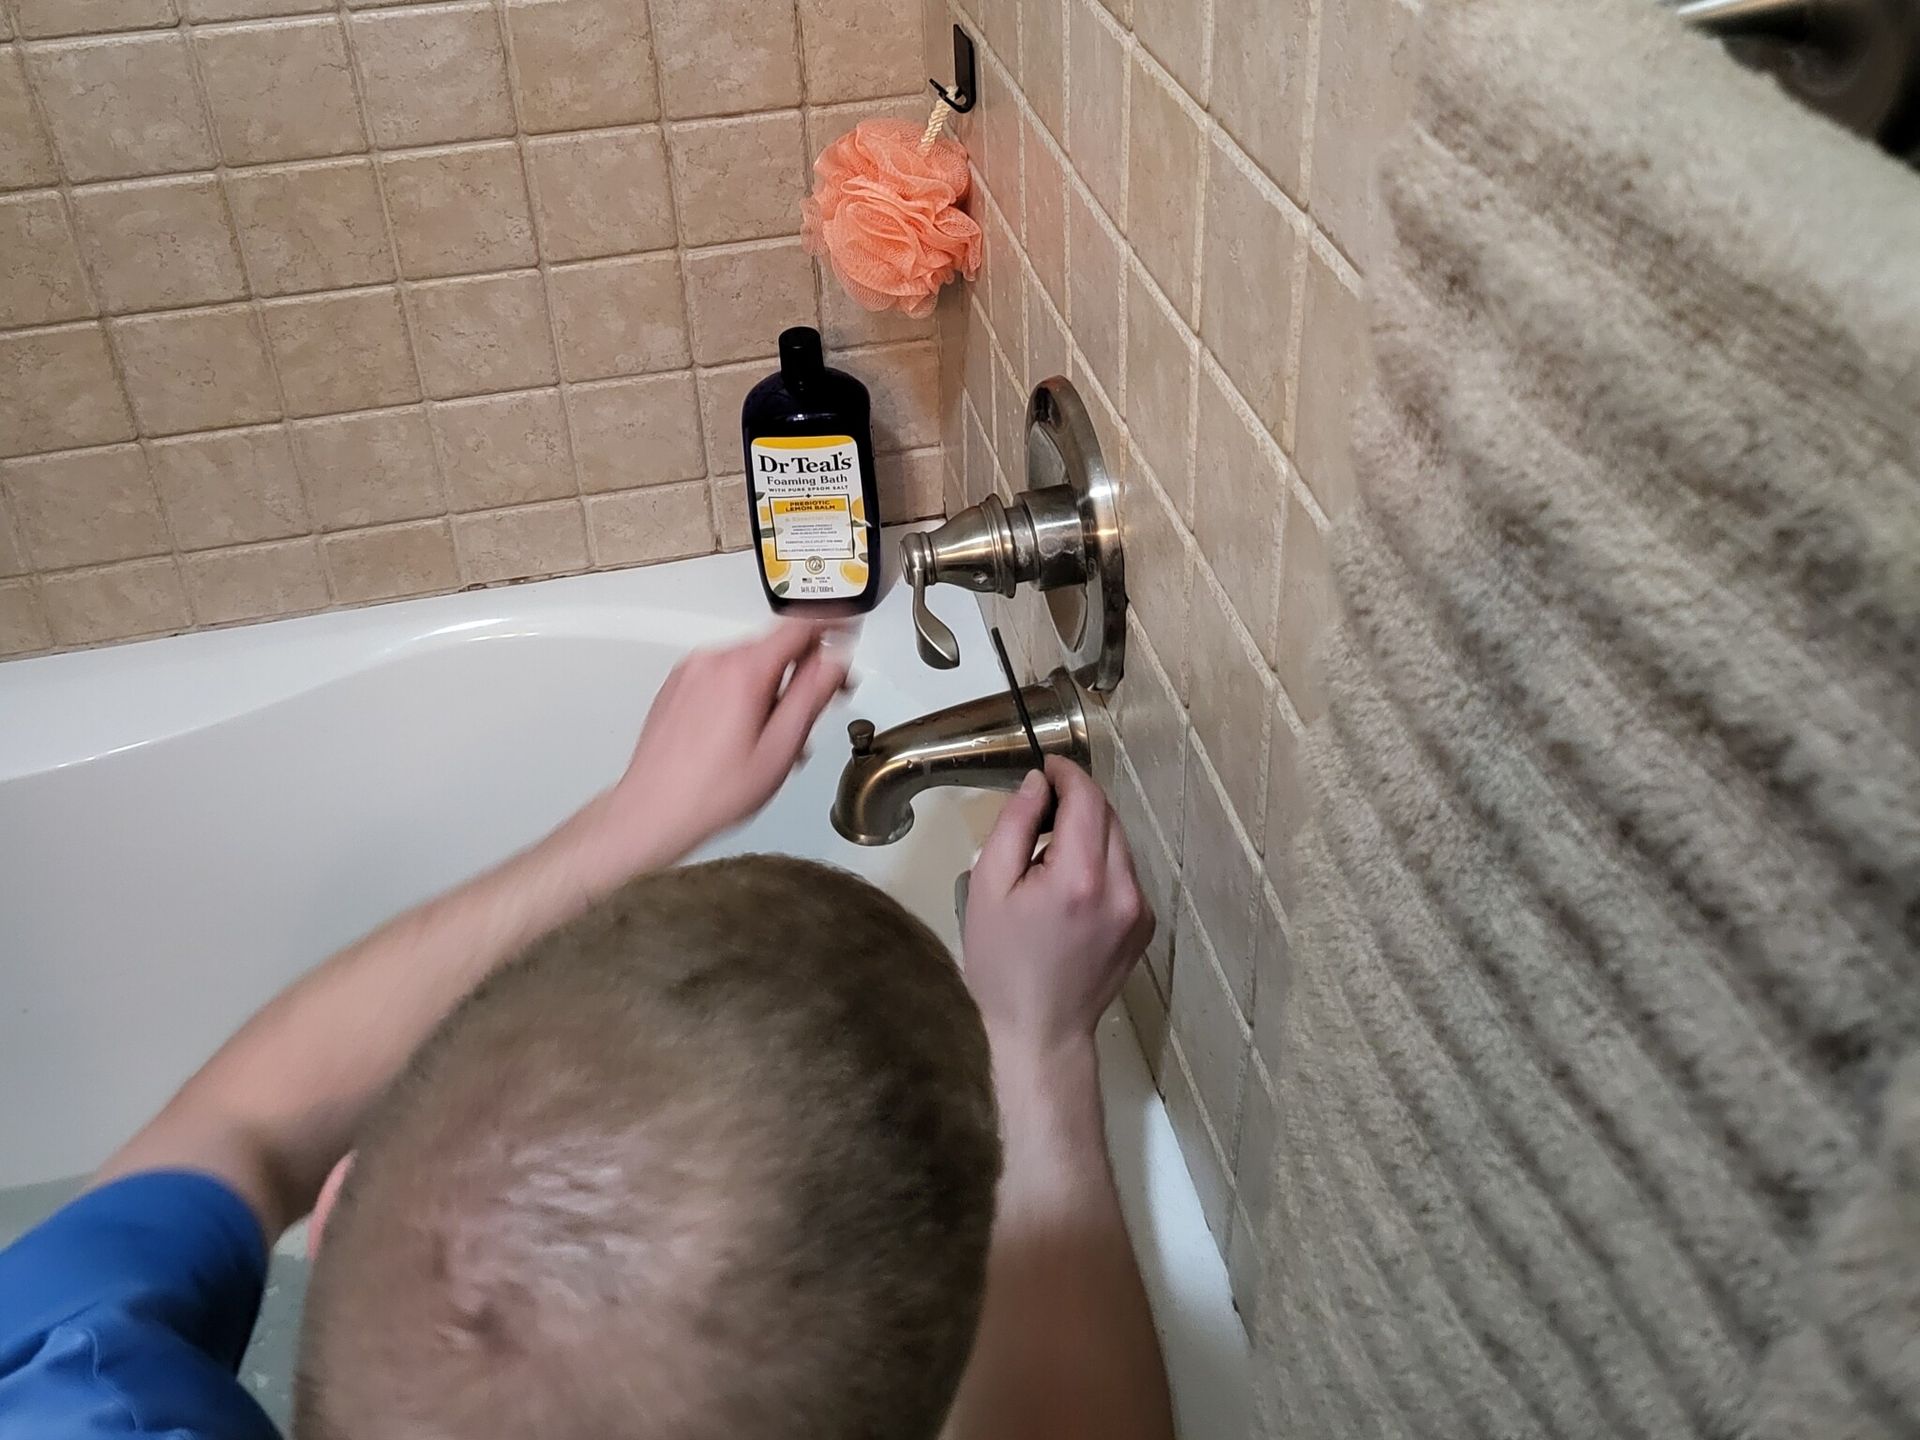 A man is fixing a bathtub faucet in a bathroom